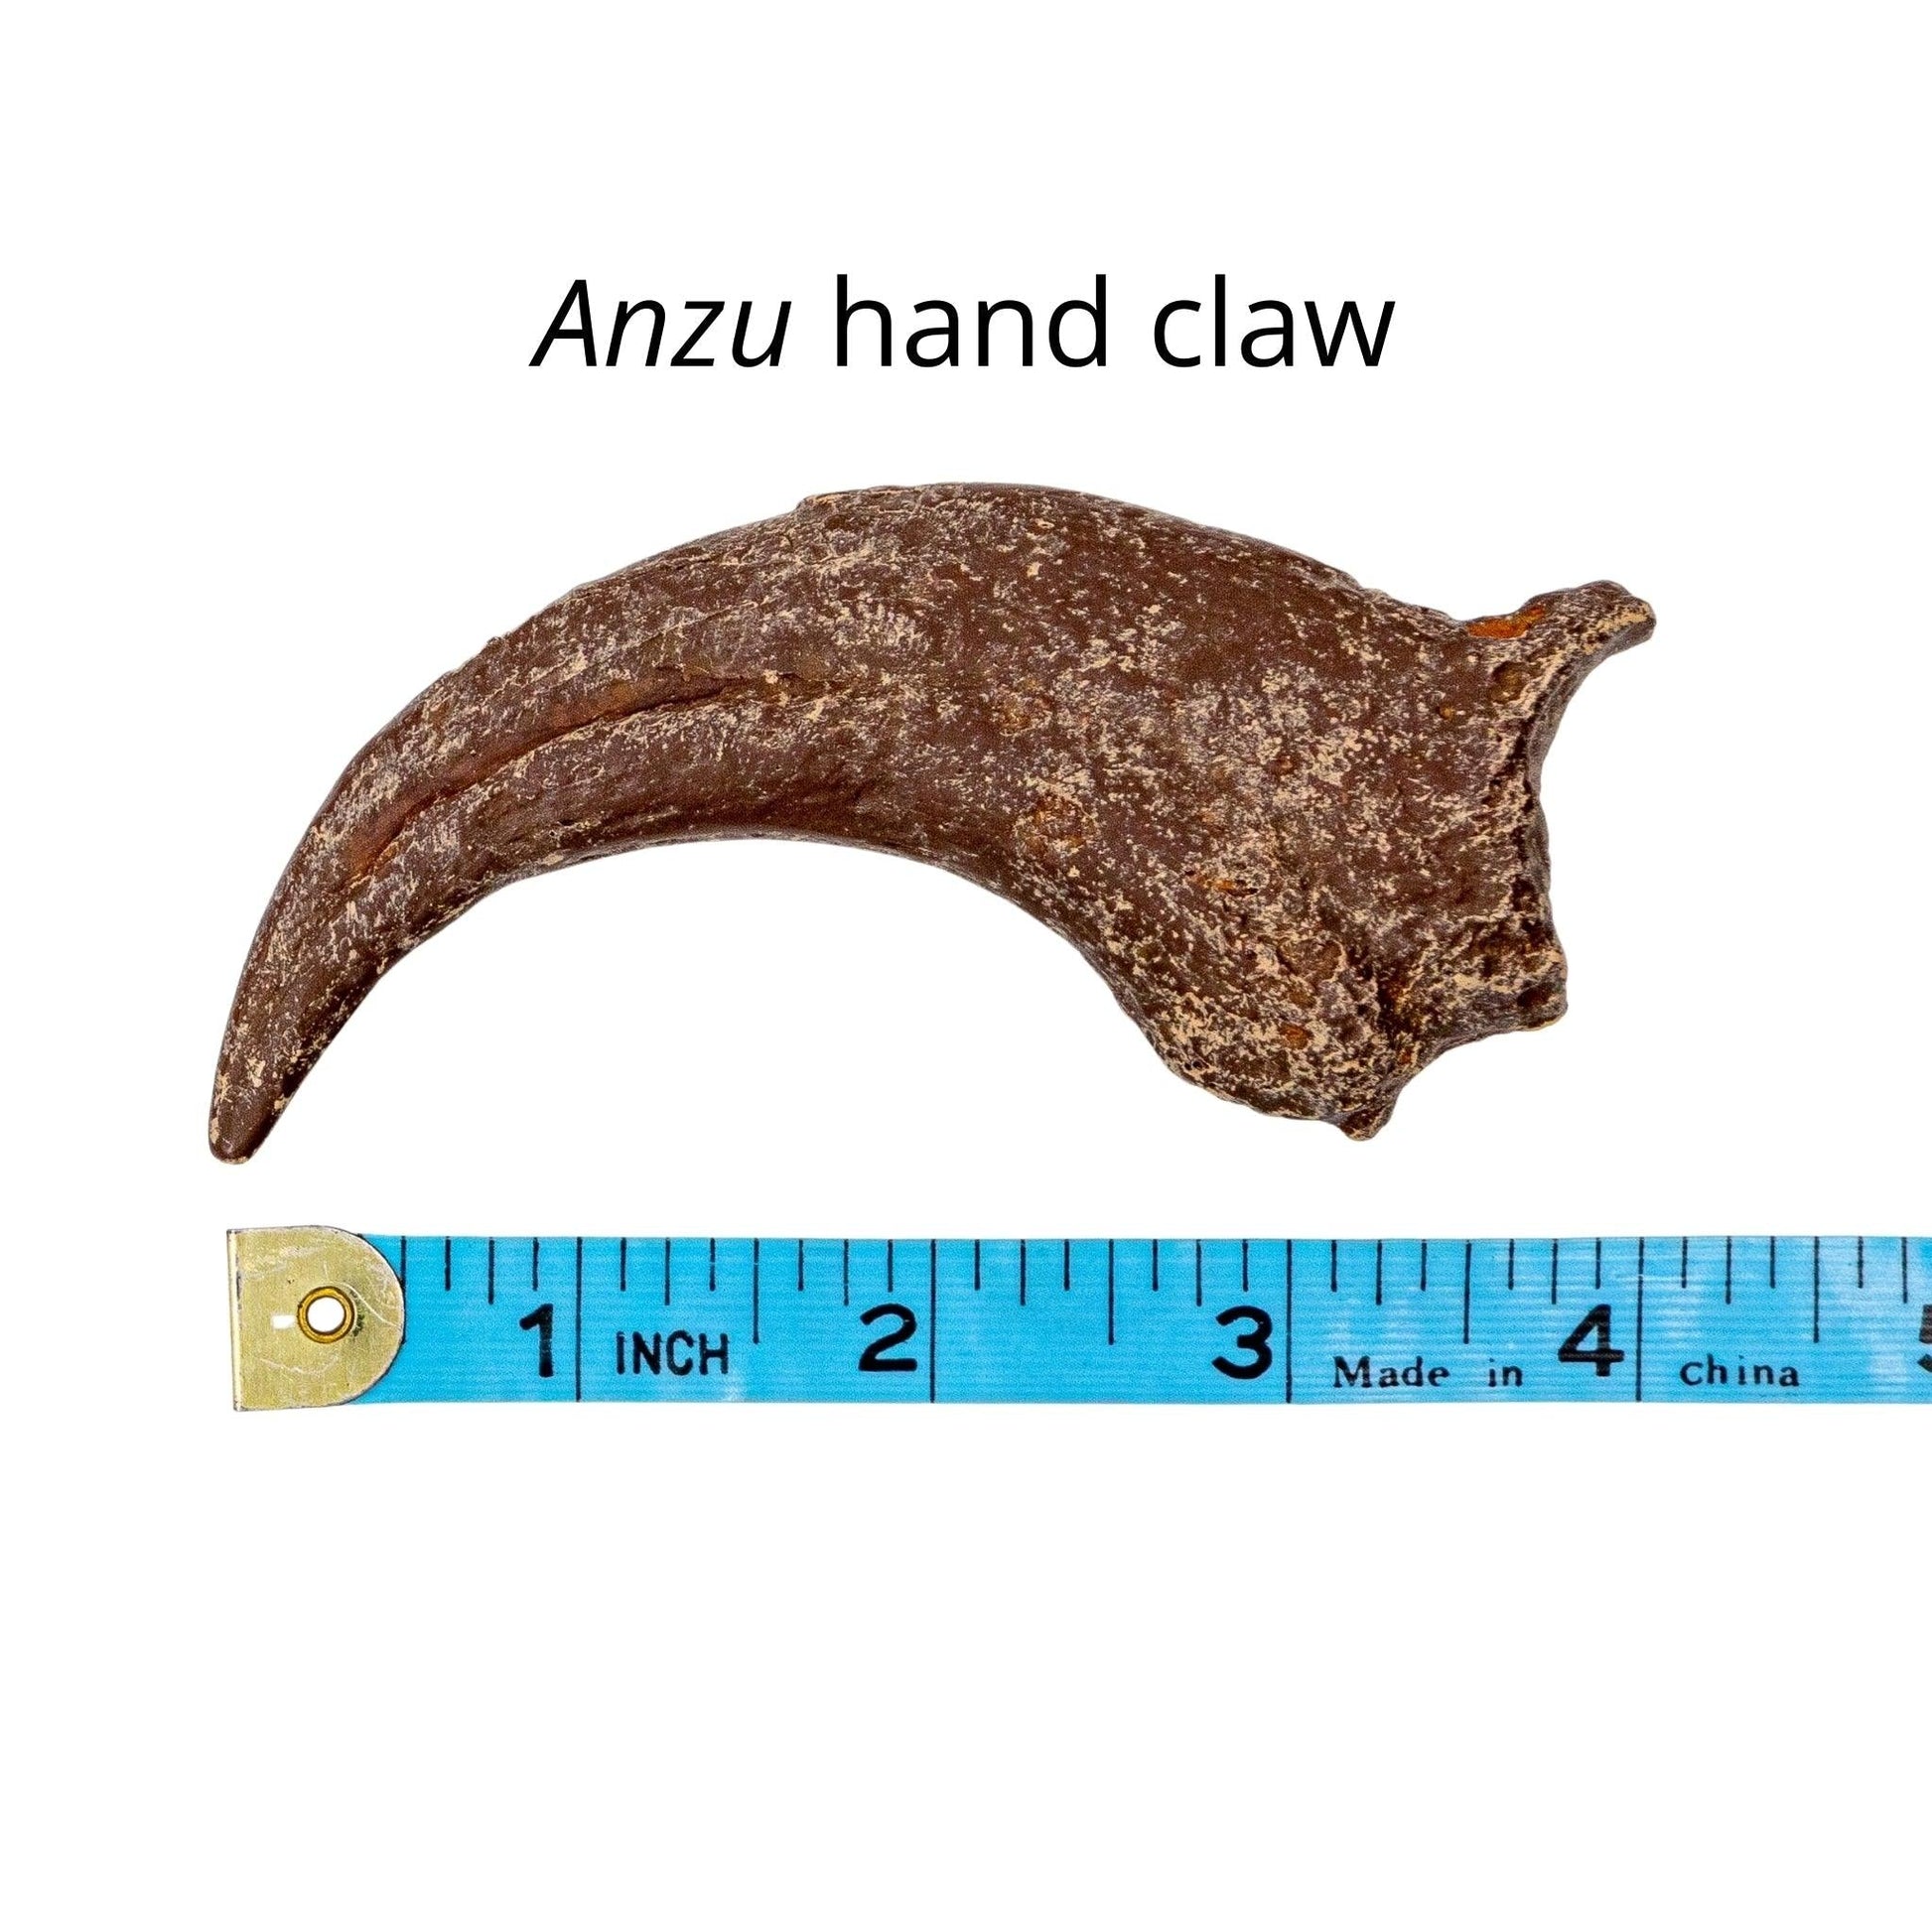 Oviraptorid egg cast and Anzu hand claw cast - Fossil Crates Dinosaur egg cast